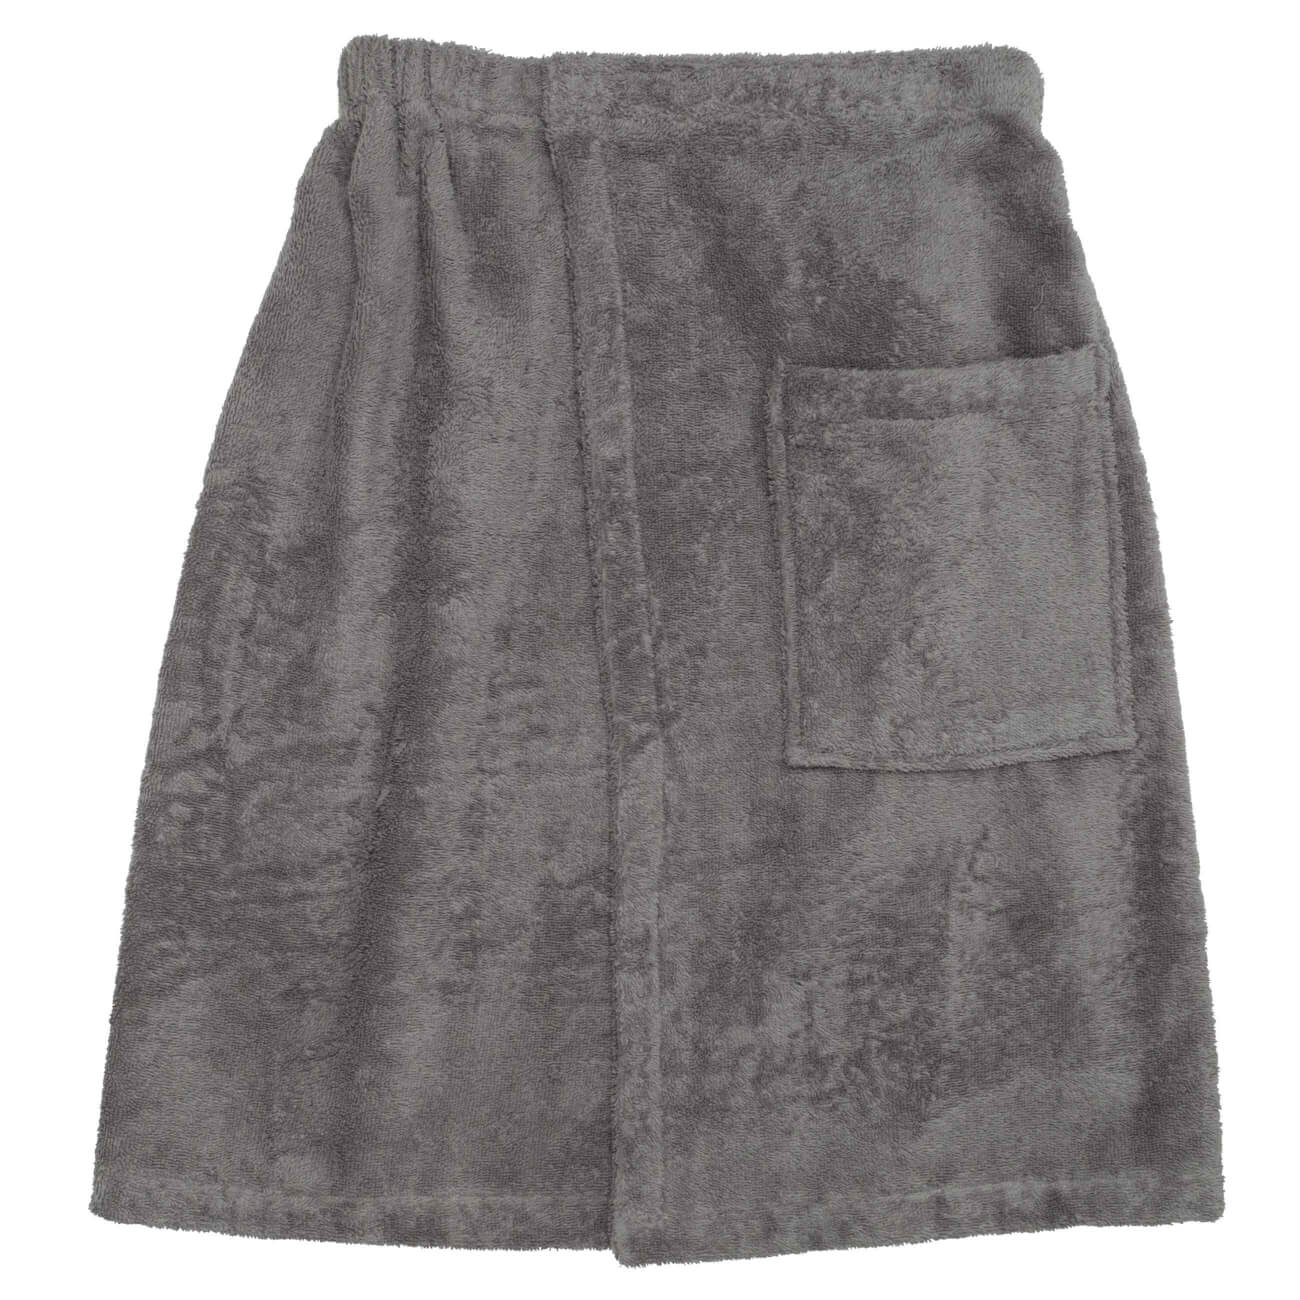 Полотенце-килт мужское, 70х160 см, на липучке, хлопок, темно-серое, Spa towel полотенце ножки темно бордовый р 50х70